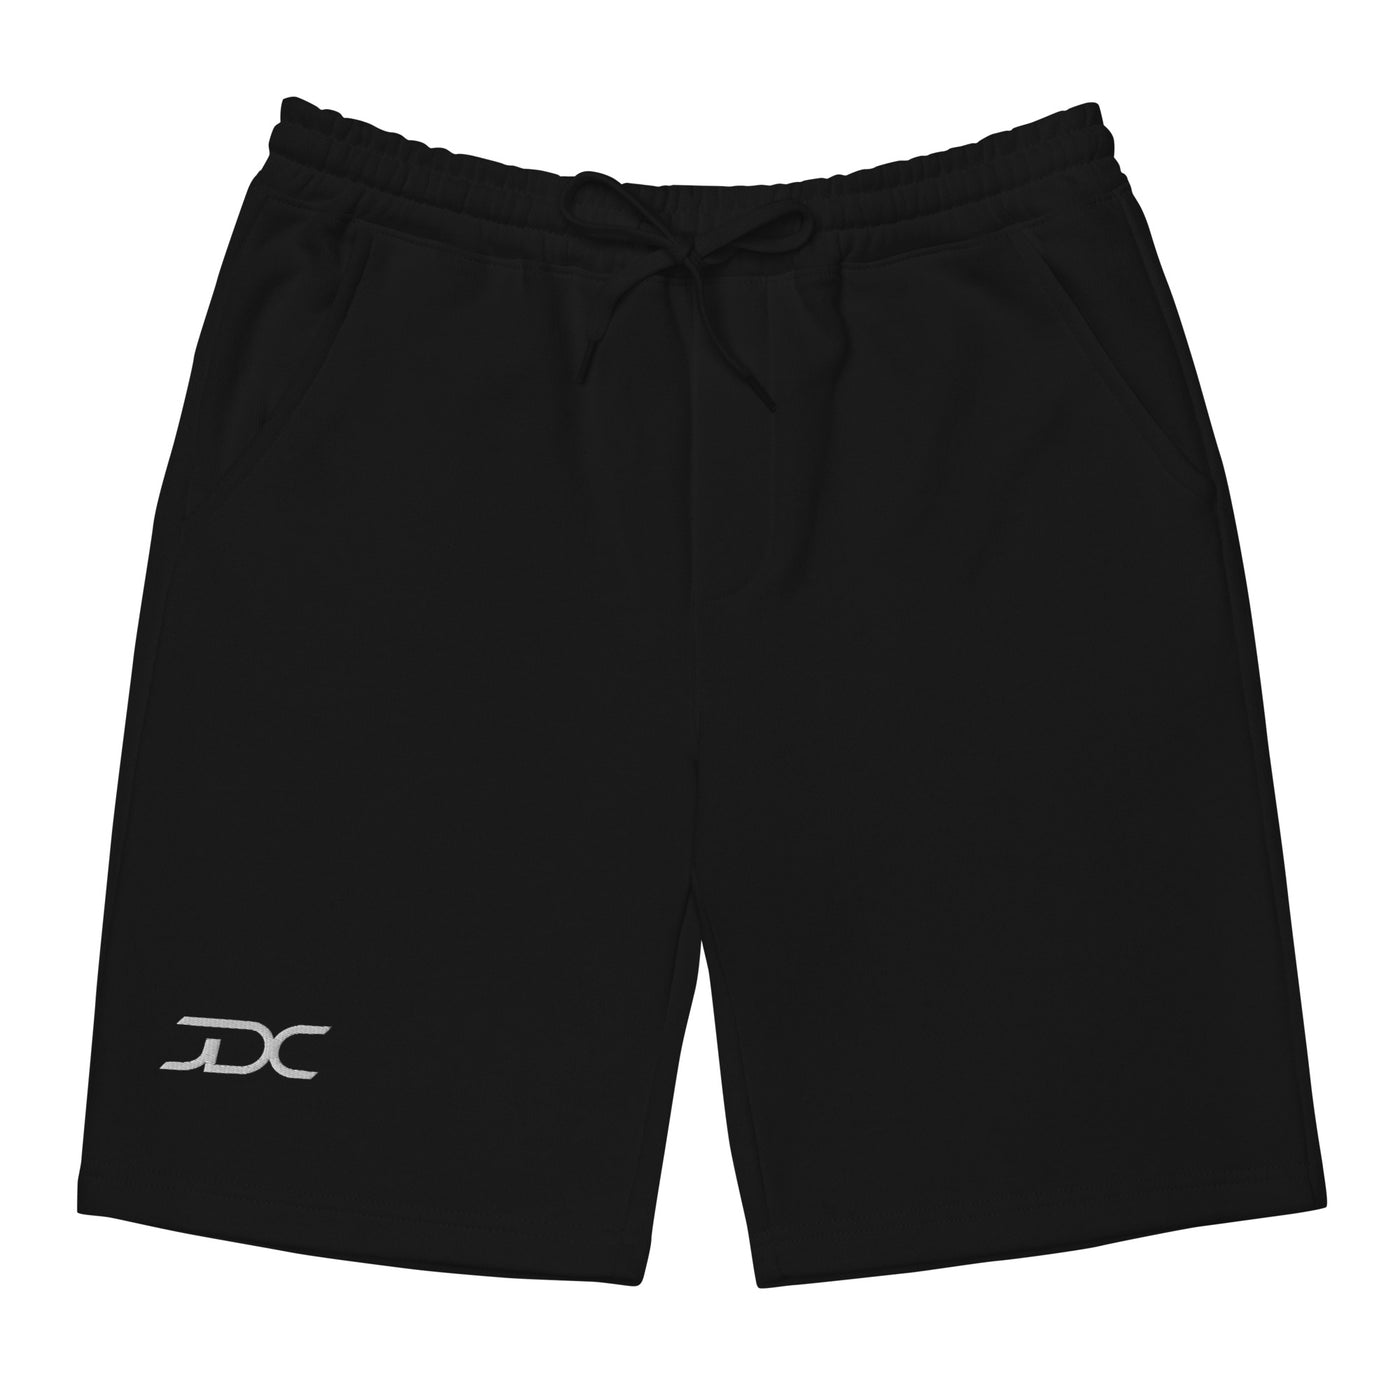 JDC Simplicity Fleece Shorts